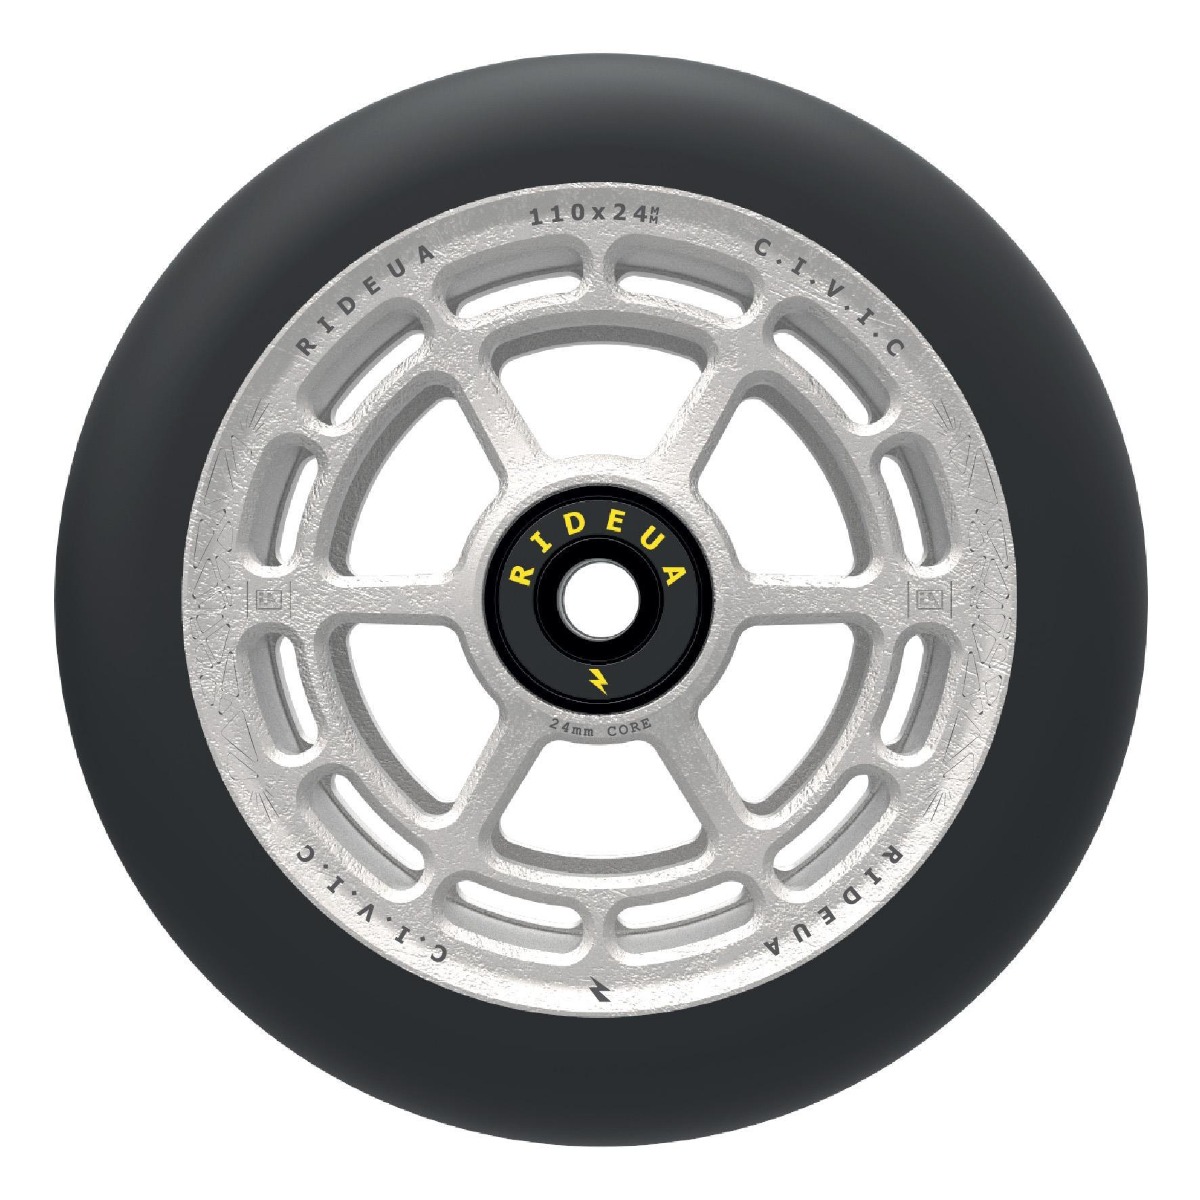 An image of Urbanartt Civic Scooter Wheels - 110mm - Stone/Black